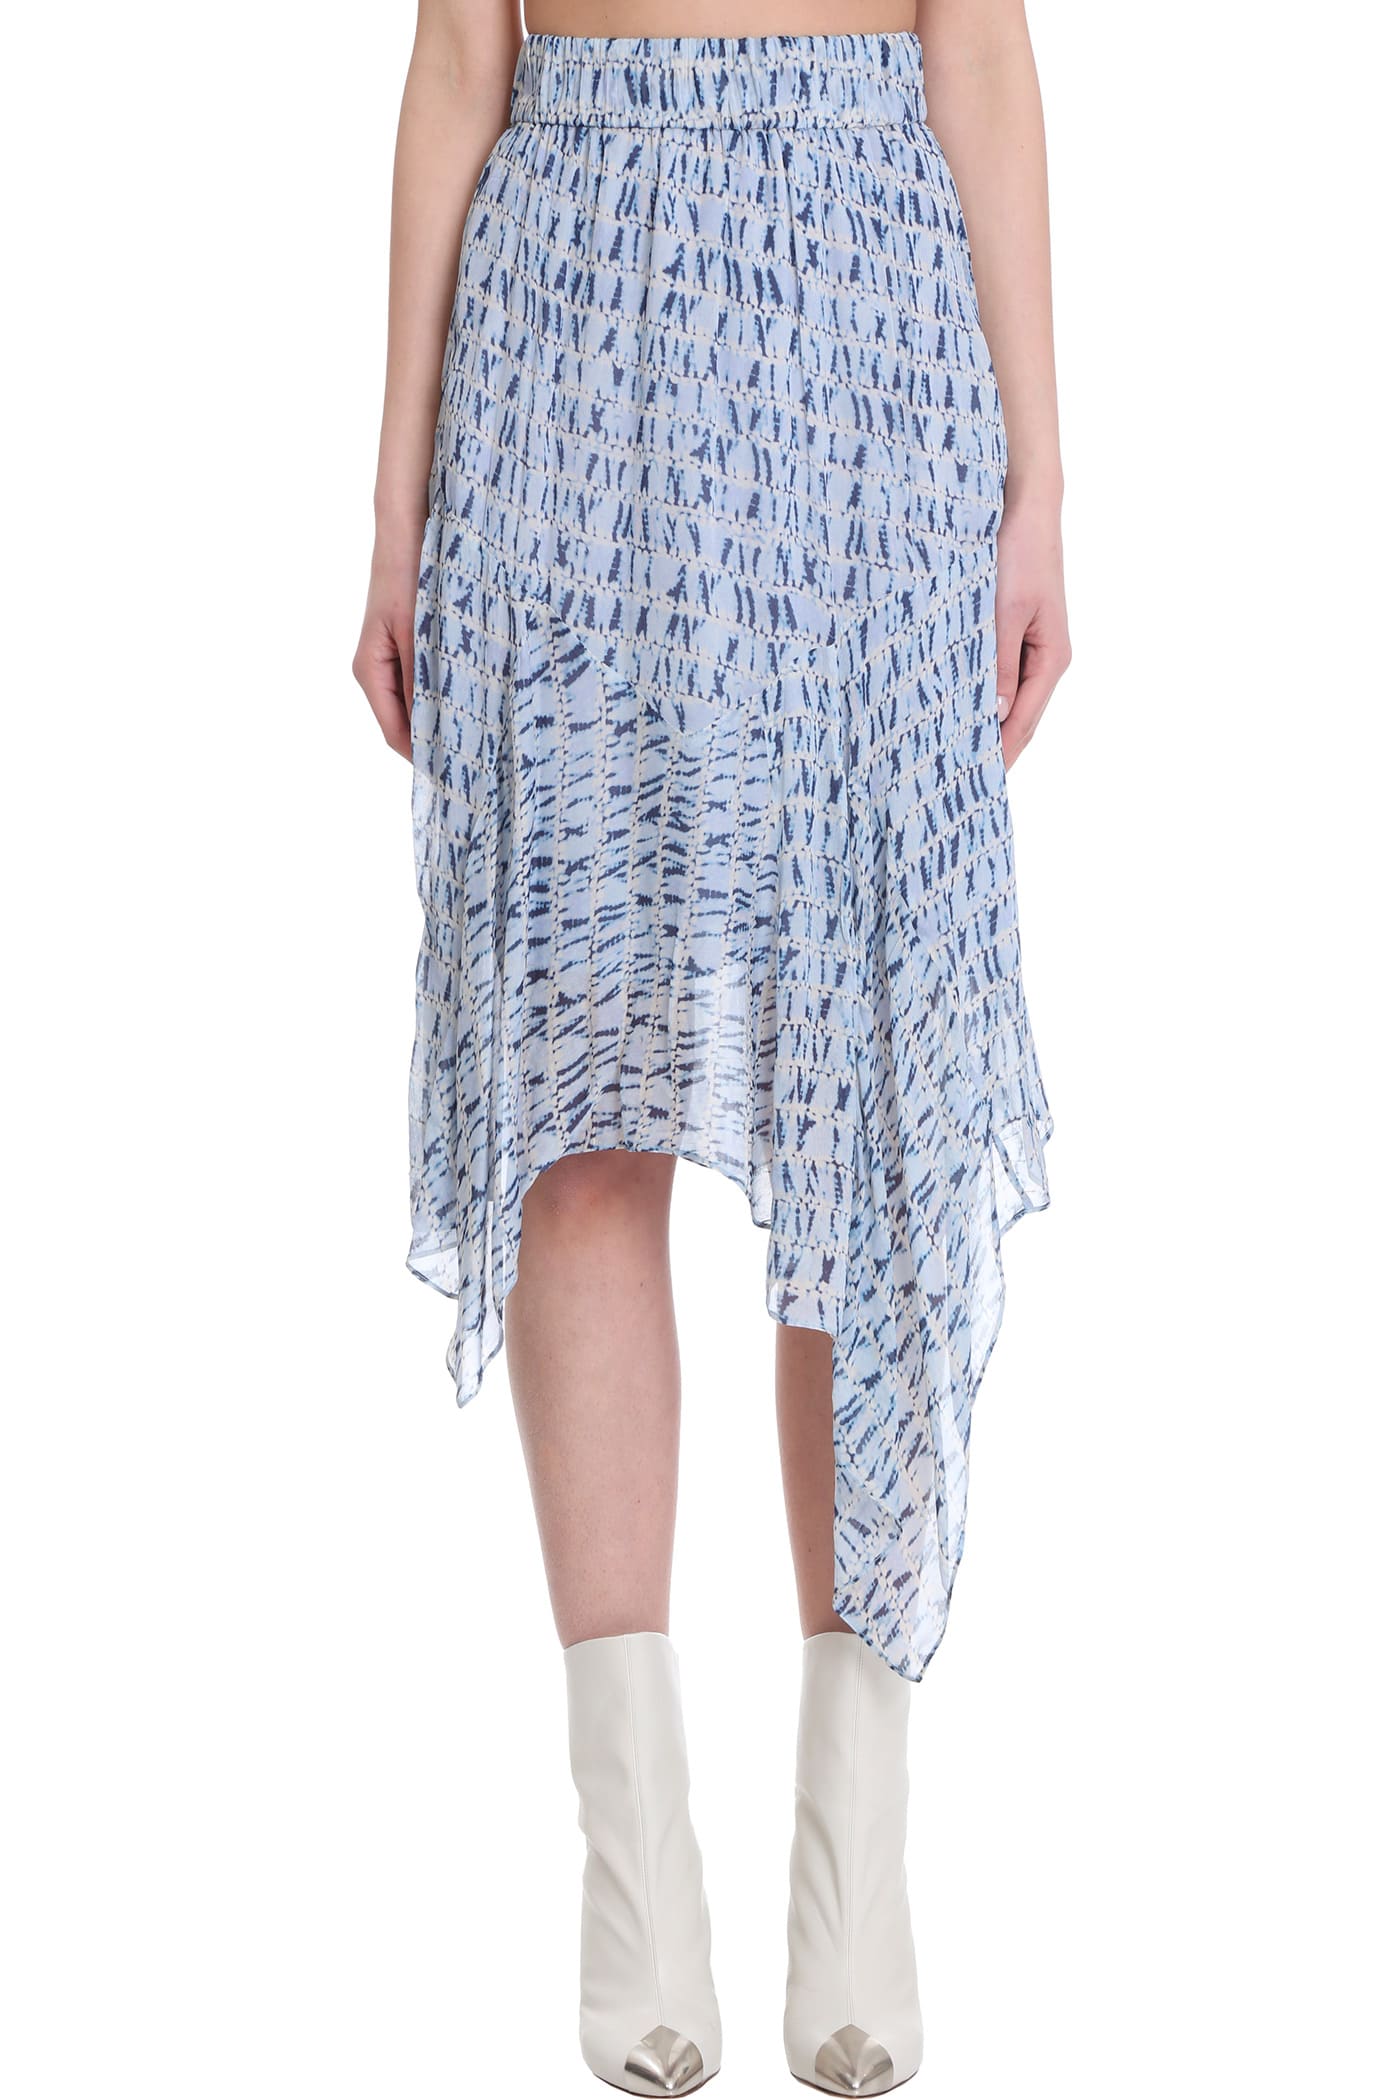 Isabel Marant Étoile skirt in blue cotton